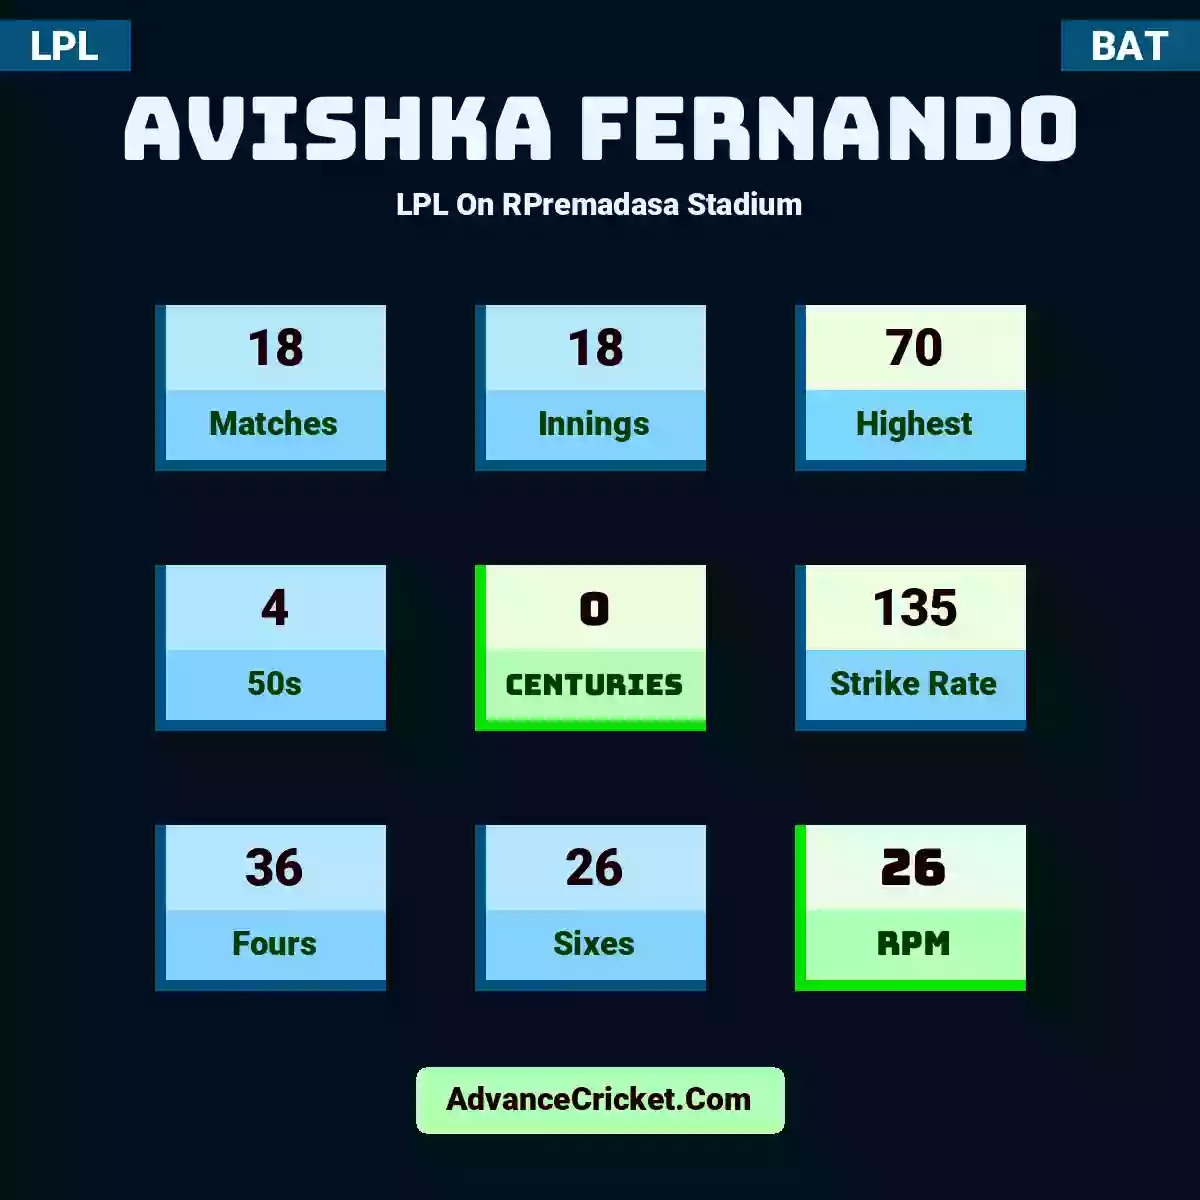 Avishka Fernando LPL  On RPremadasa Stadium, Avishka Fernando played 18 matches, scored 70 runs as highest, 4 half-centuries, and 0 centuries, with a strike rate of 135. A.Fernando hit 36 fours and 26 sixes, with an RPM of 26.